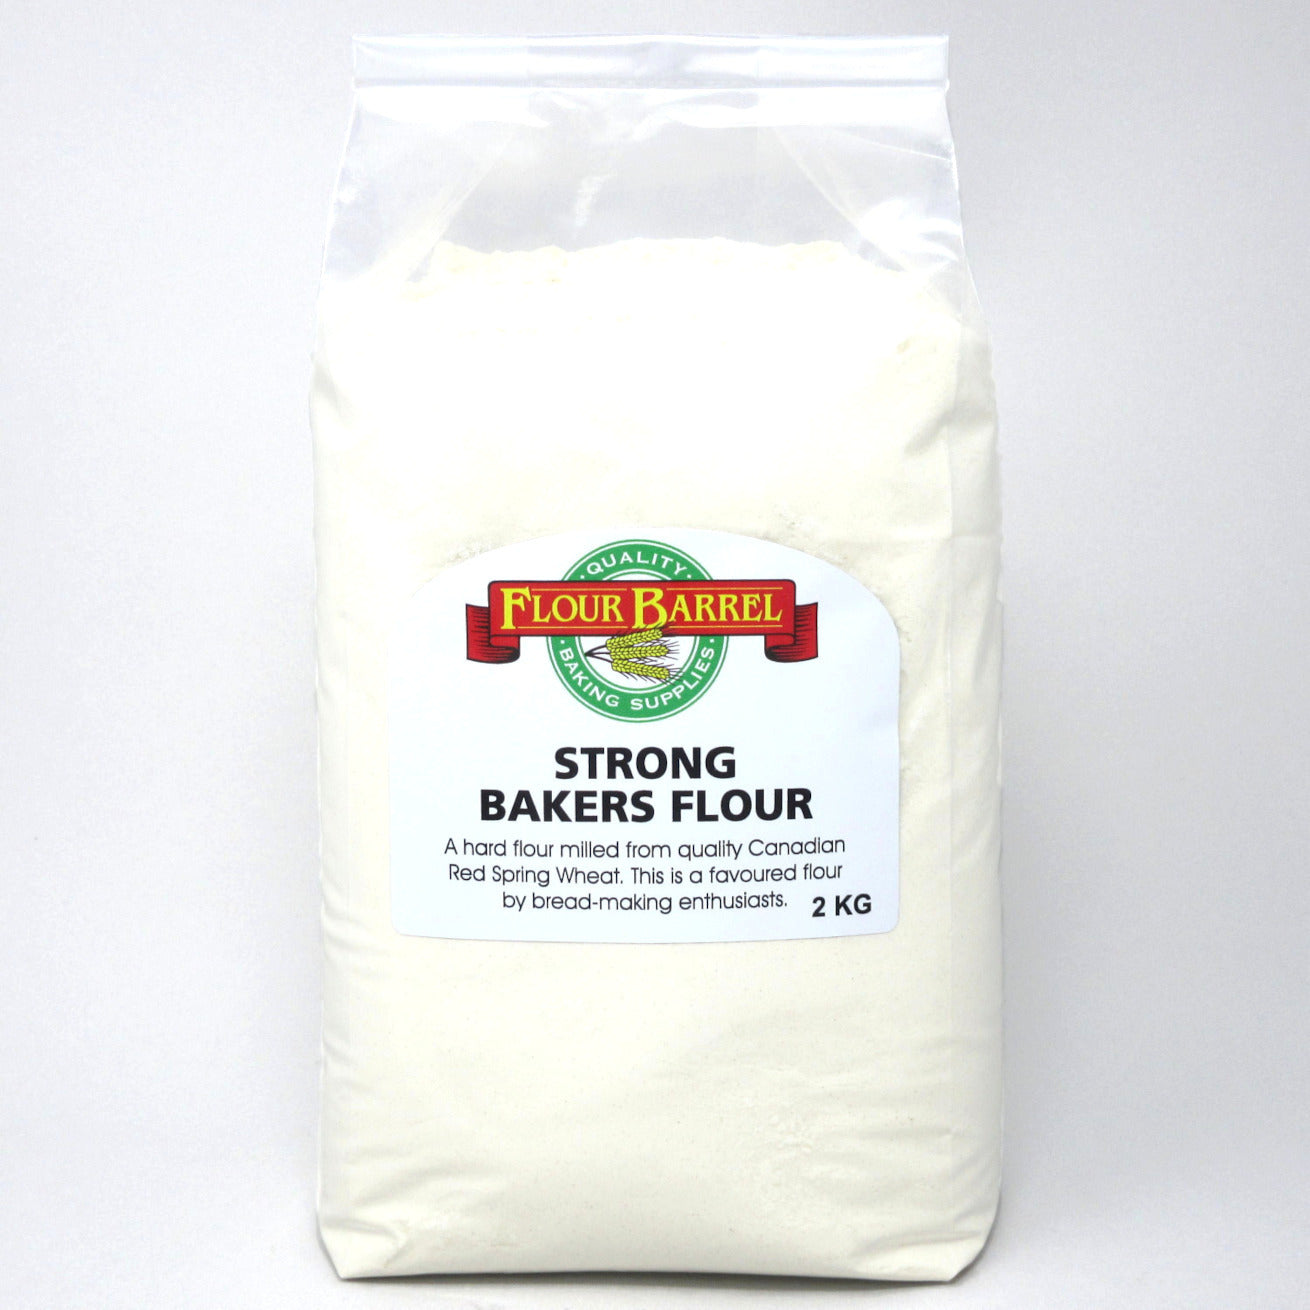 Flour Barrel product image - Strong Bakers Flour